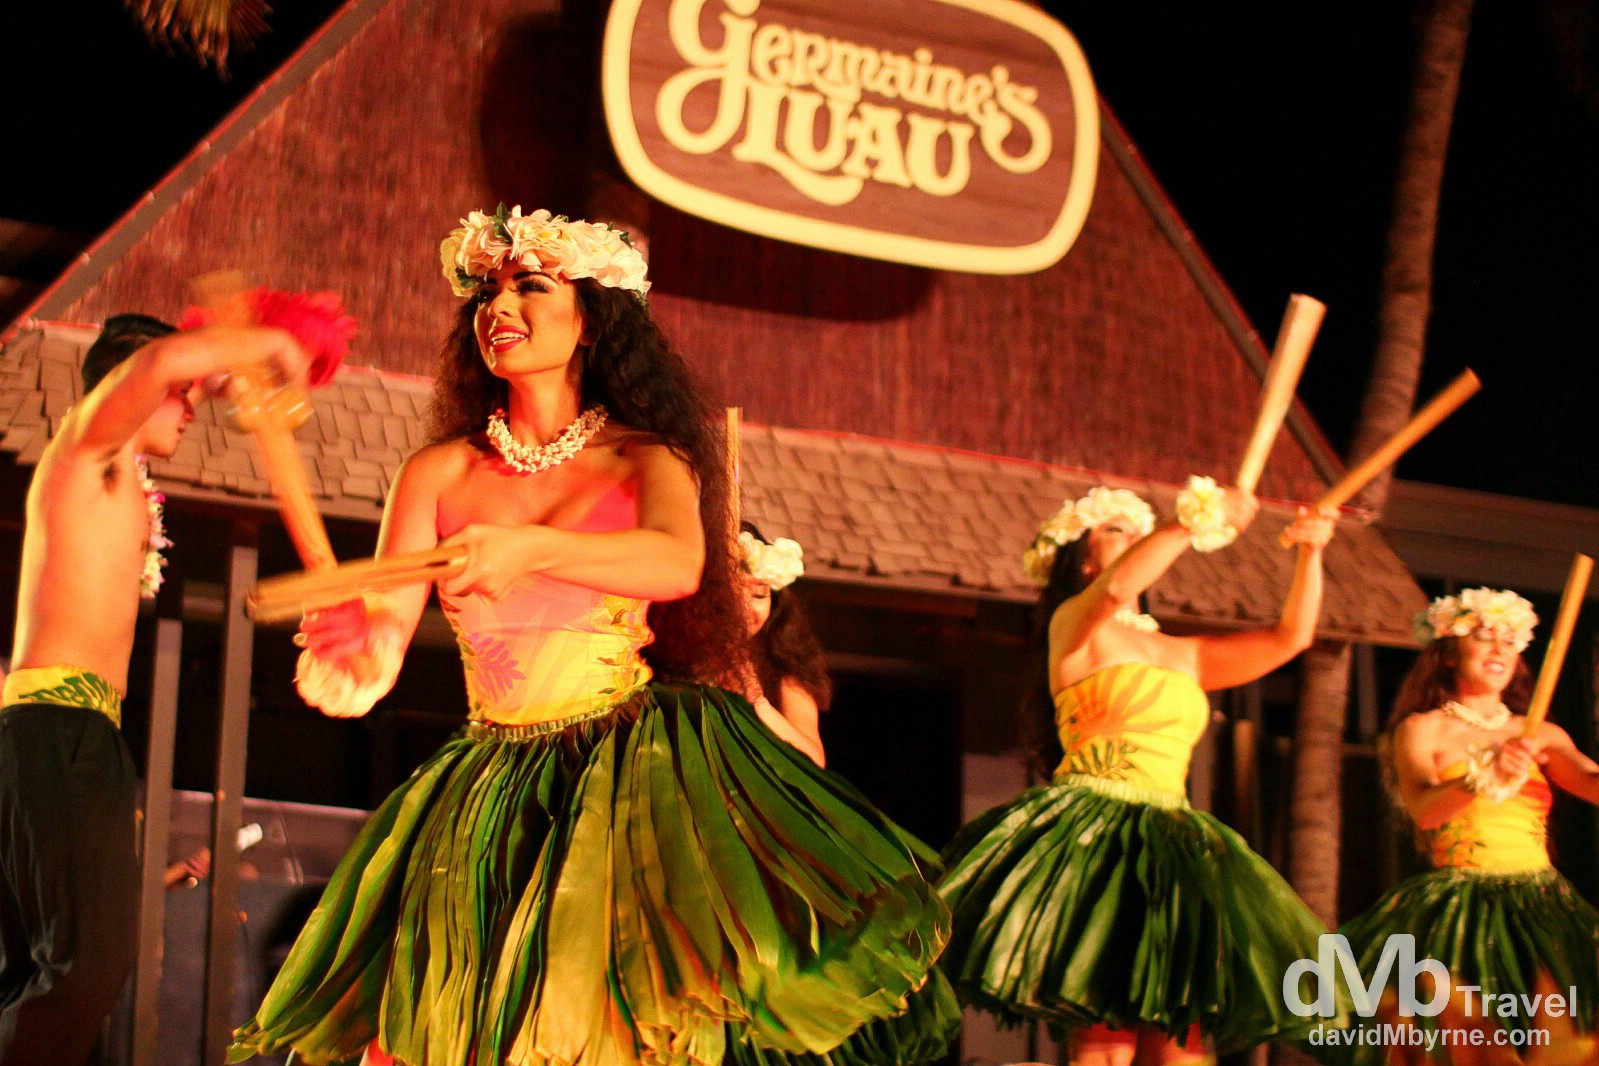 Dancers at Germaine's Luau, Oahu, Hawaii. February 27th 2013.